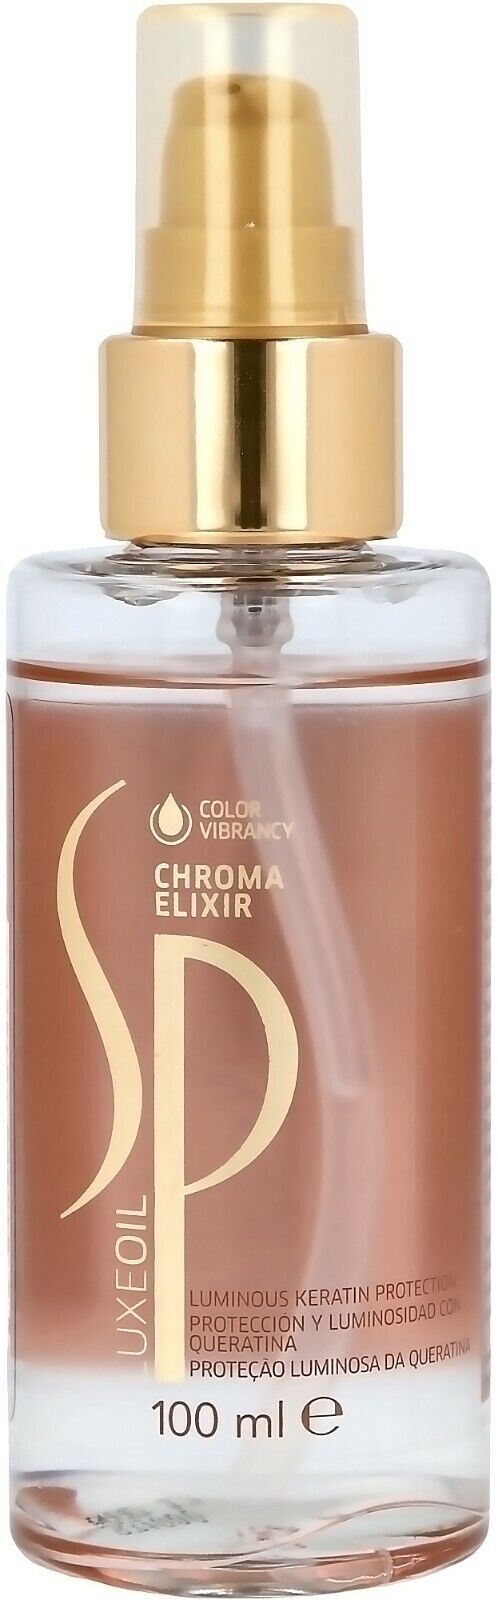 Wella SP Luxe oil CHROMA ELIXIR 100ml 3.38oz (For colored hair)  3614226764867 eBay